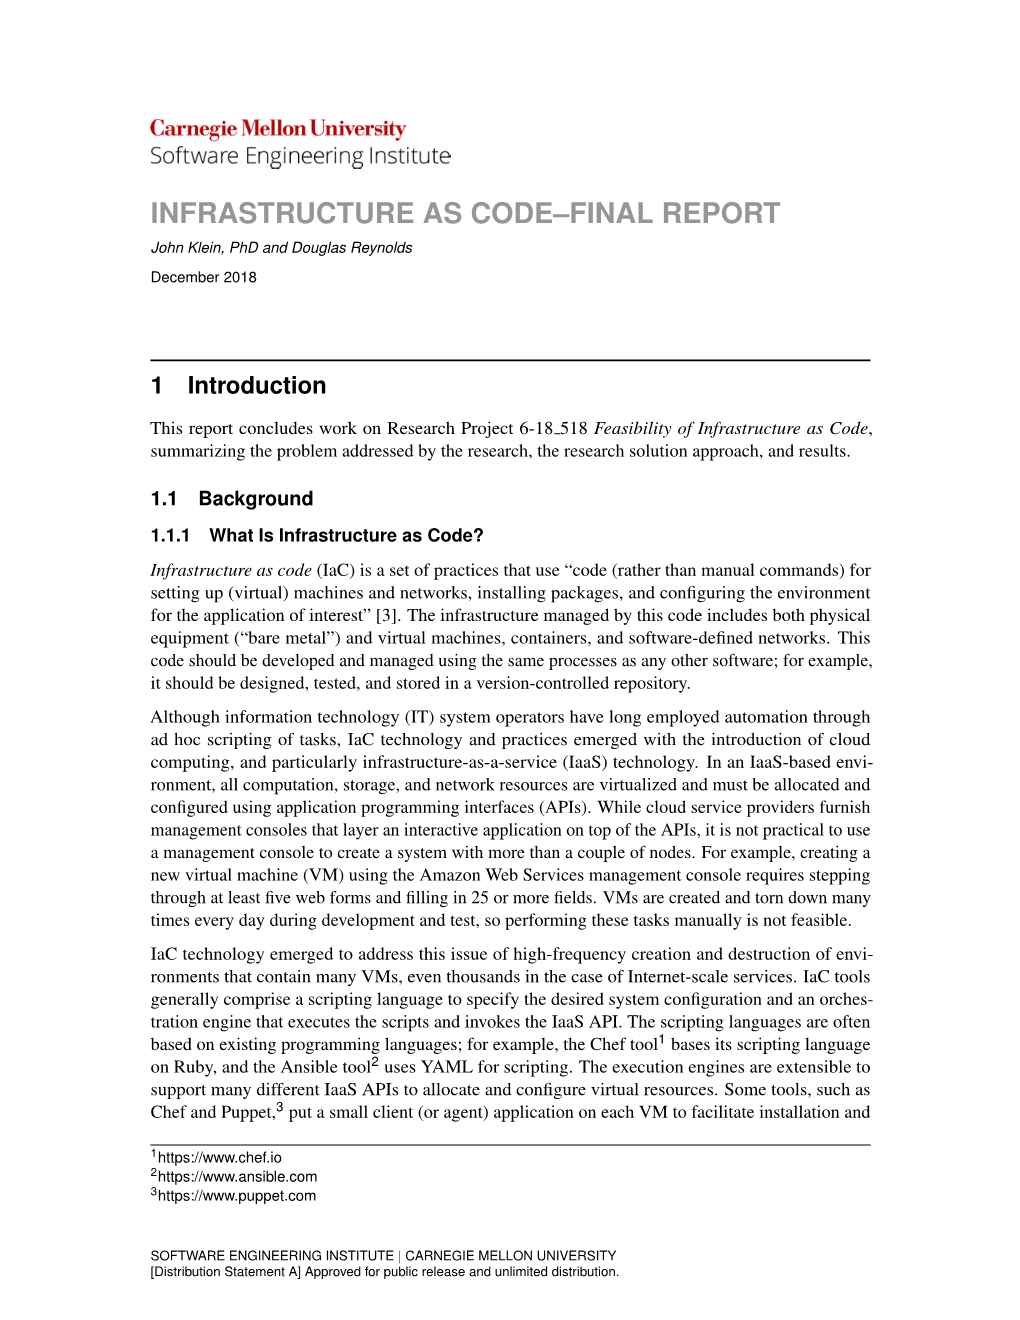 INFRASTRUCTURE AS CODE–FINAL REPORT John Klein, Phd and Douglas Reynolds December 2018